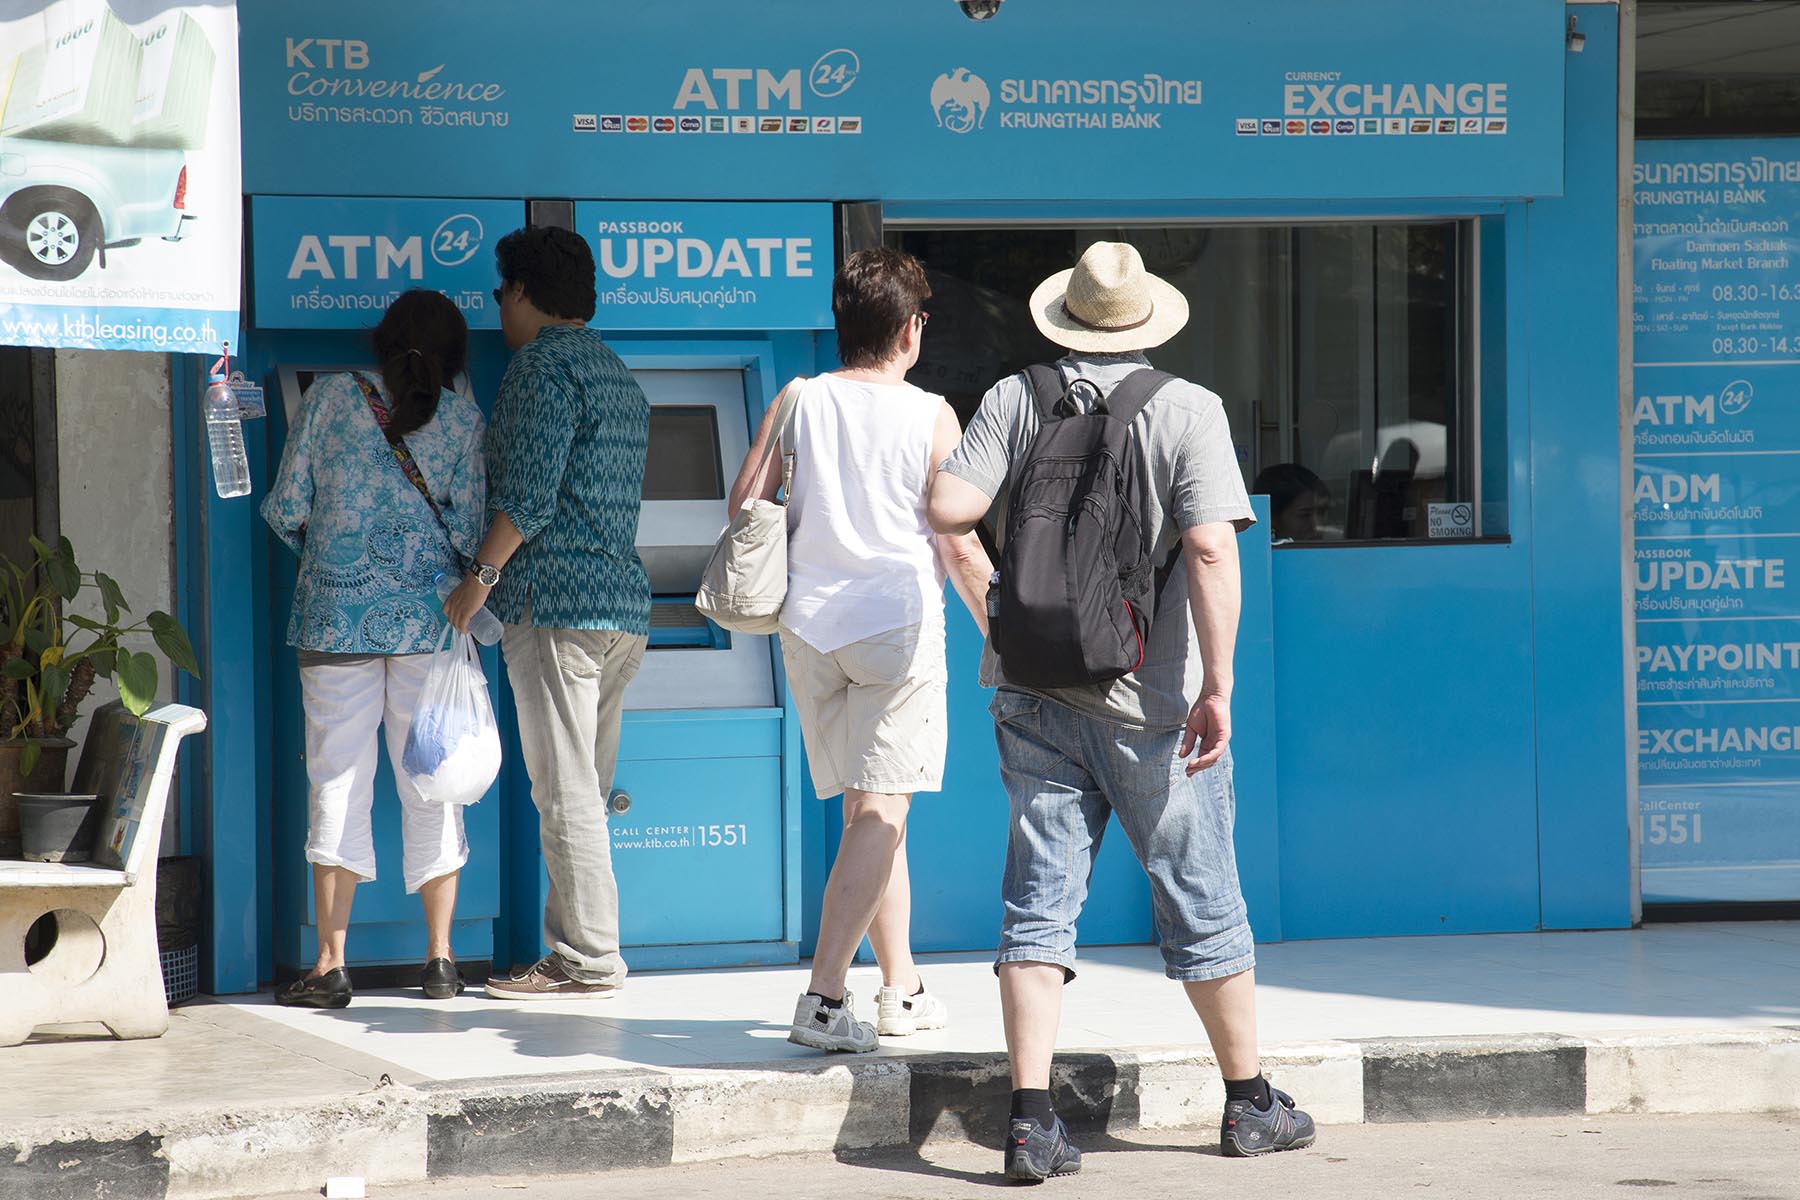 Tourists using the ATM at a Krungthai Bank in Damnoen Saduak, Thailand.